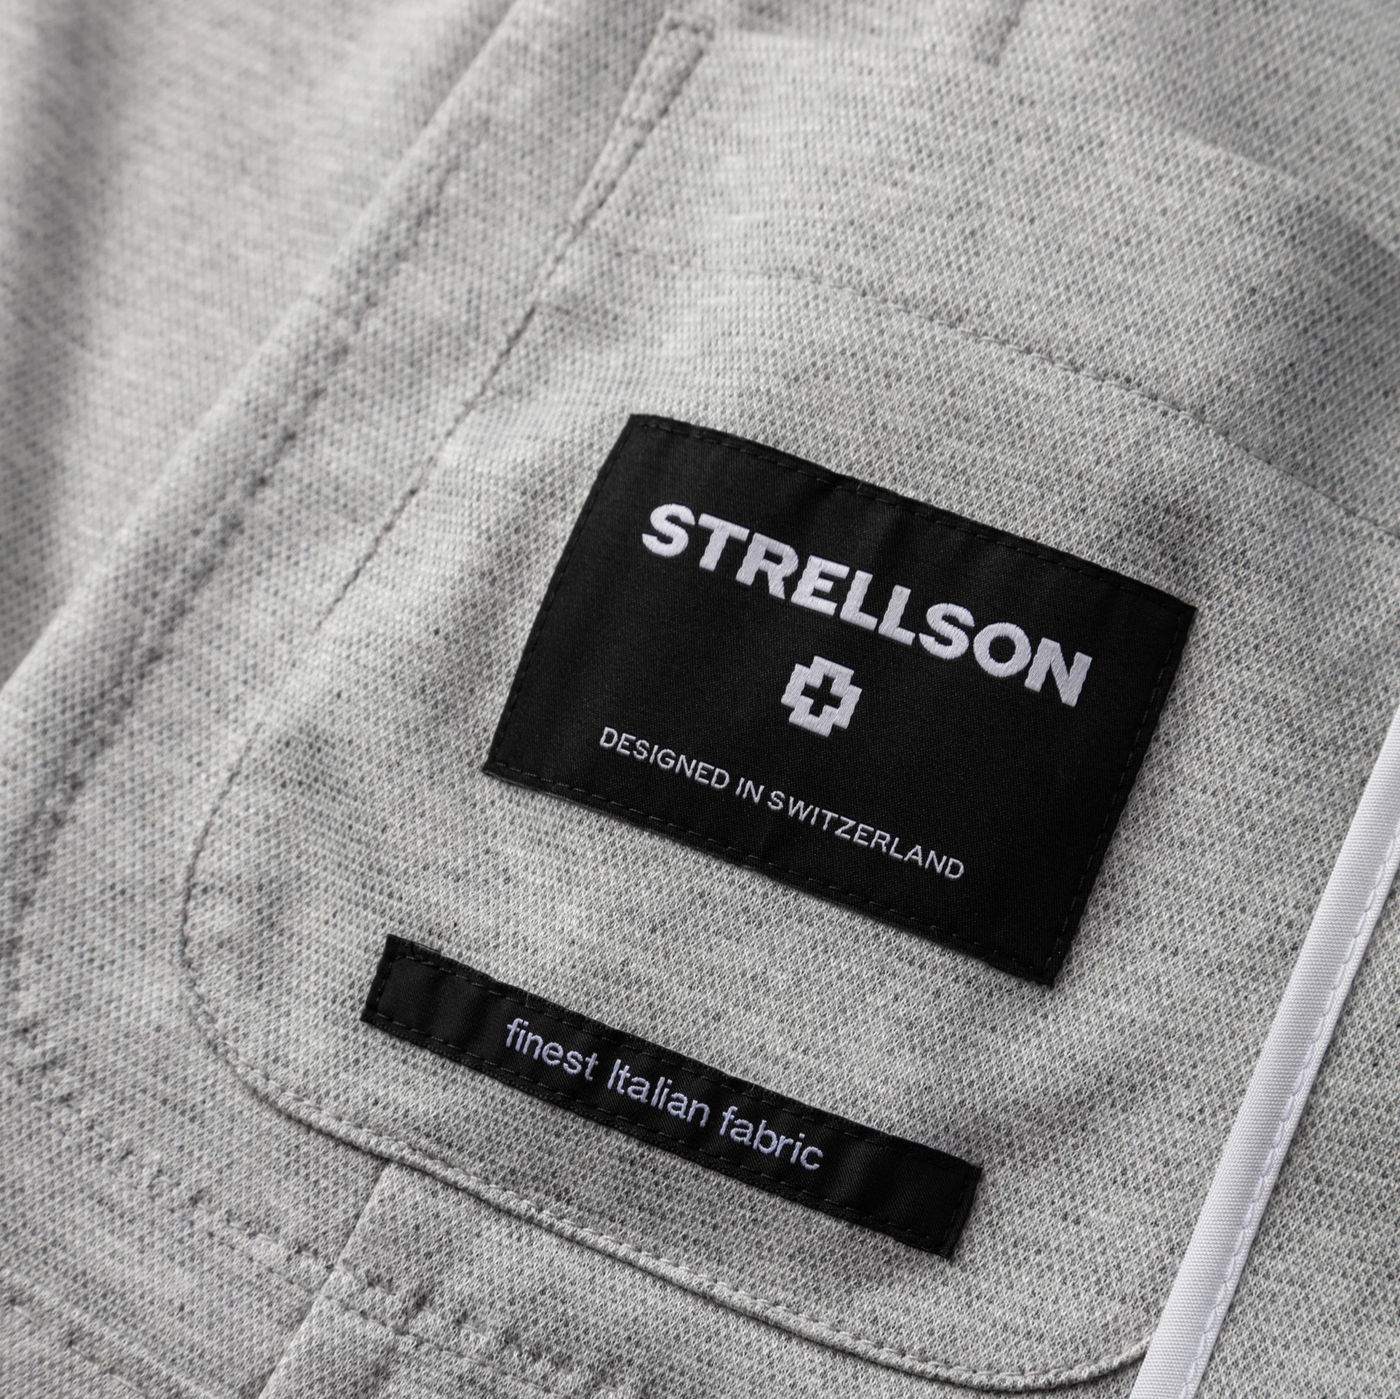 Gotstyle Fashion - Strellson Blazers Patch Pocket Stretch Jersey Blazer - Light Grey